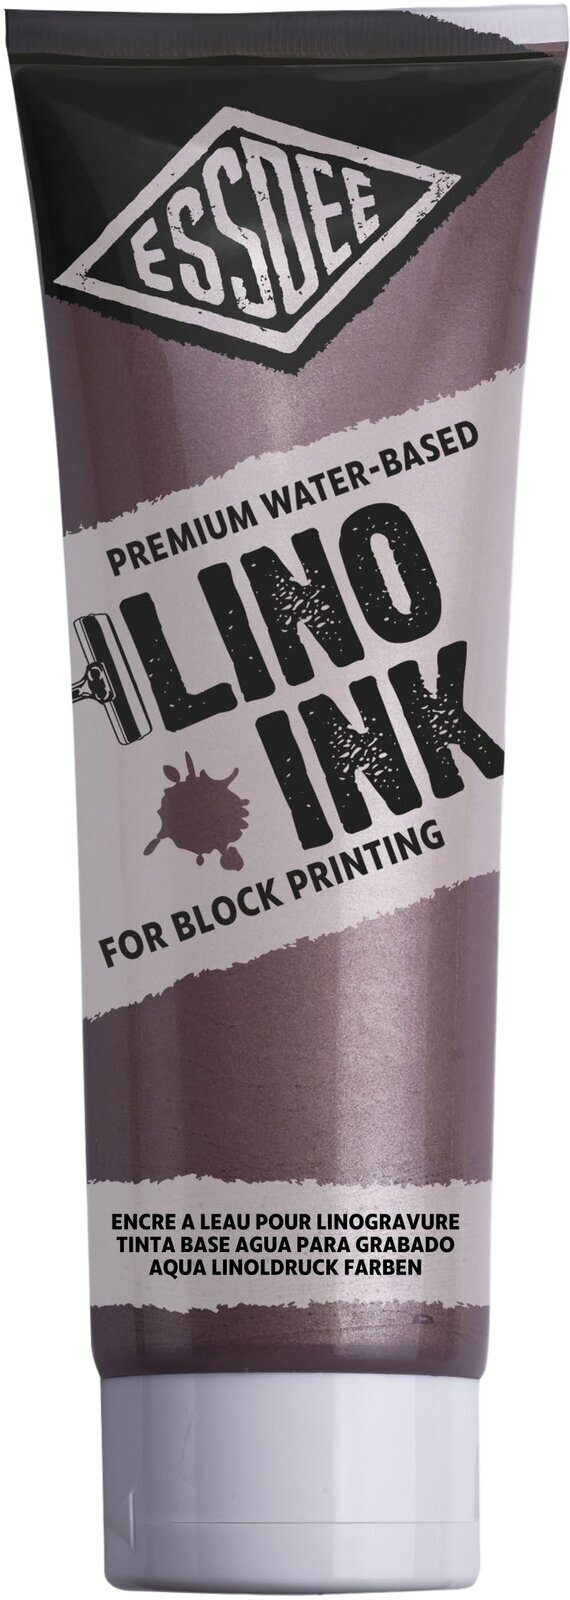 Tinta para linogravura Essdee Block Printing Ink Tinta para linogravura Metallic Bronze 300 ml